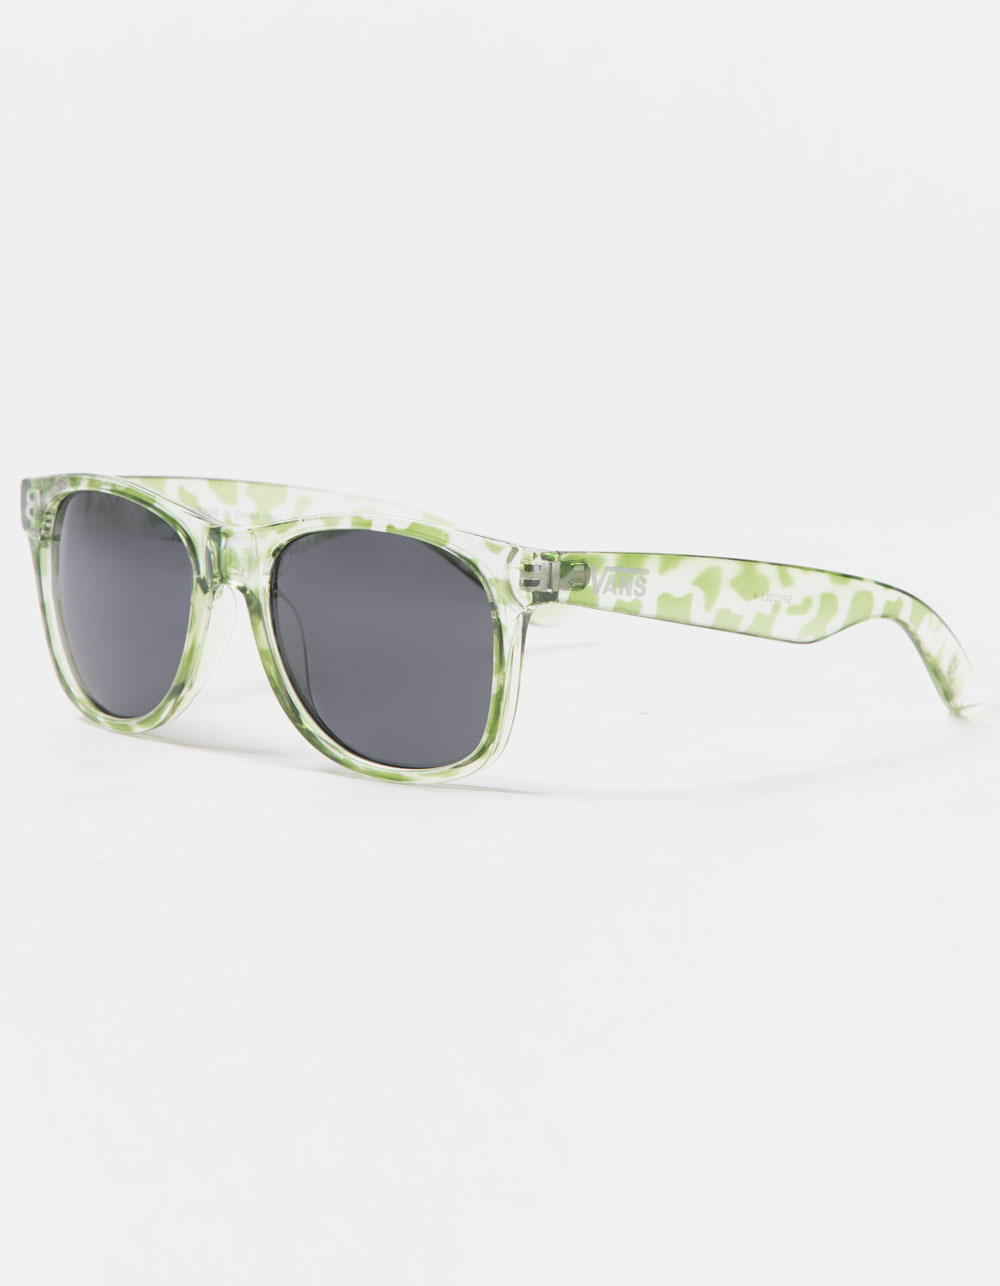 VANS Sunglasses - GREEN |